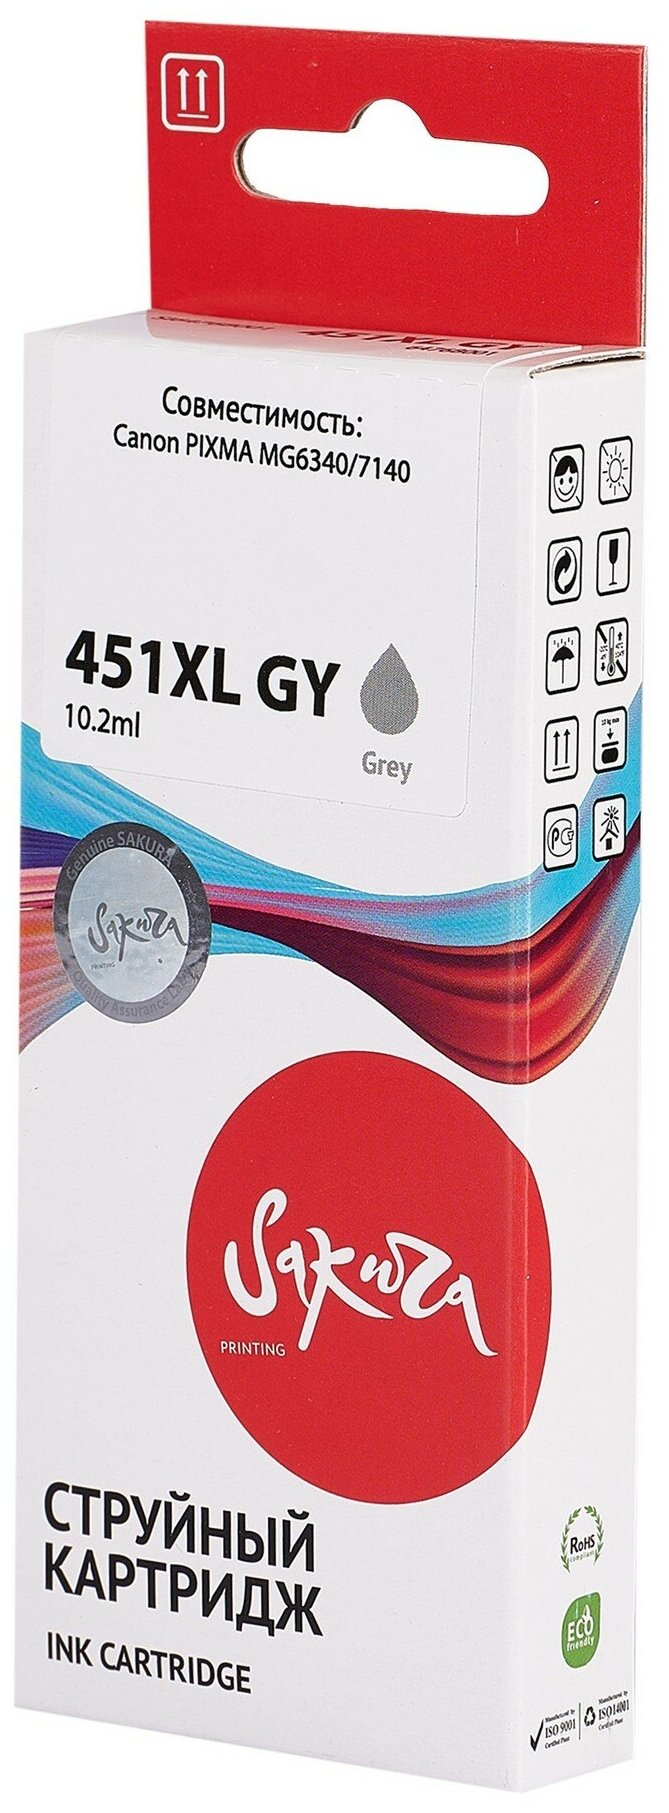 Картридж 6476B001 (451XL GY ) для Canon, струйный, серый, 10,2 мл, 350 страниц, Sakura